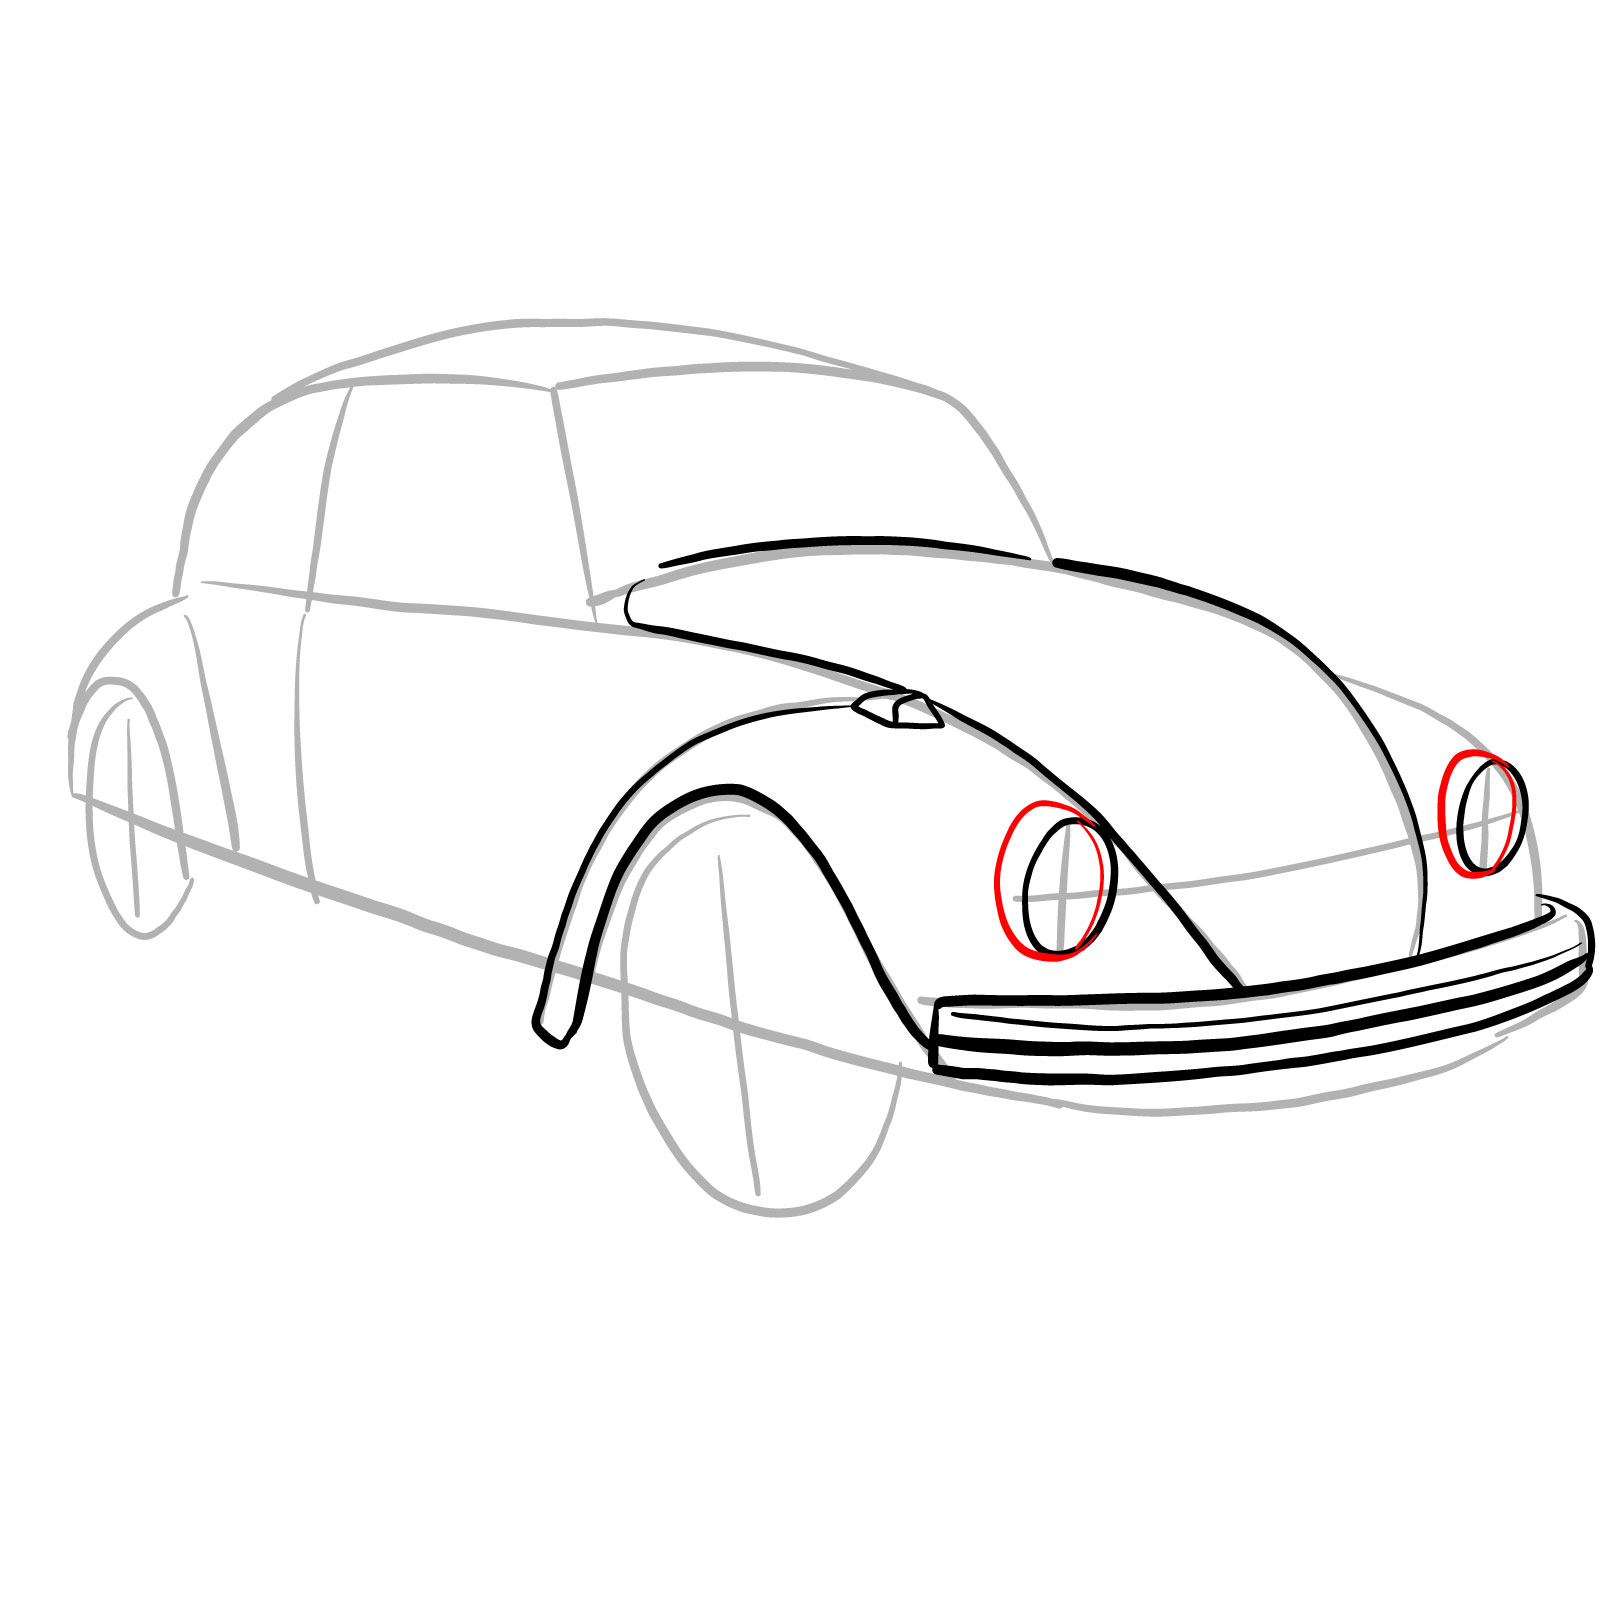 How to draw Volkswagen Beetle 1972 - step 13